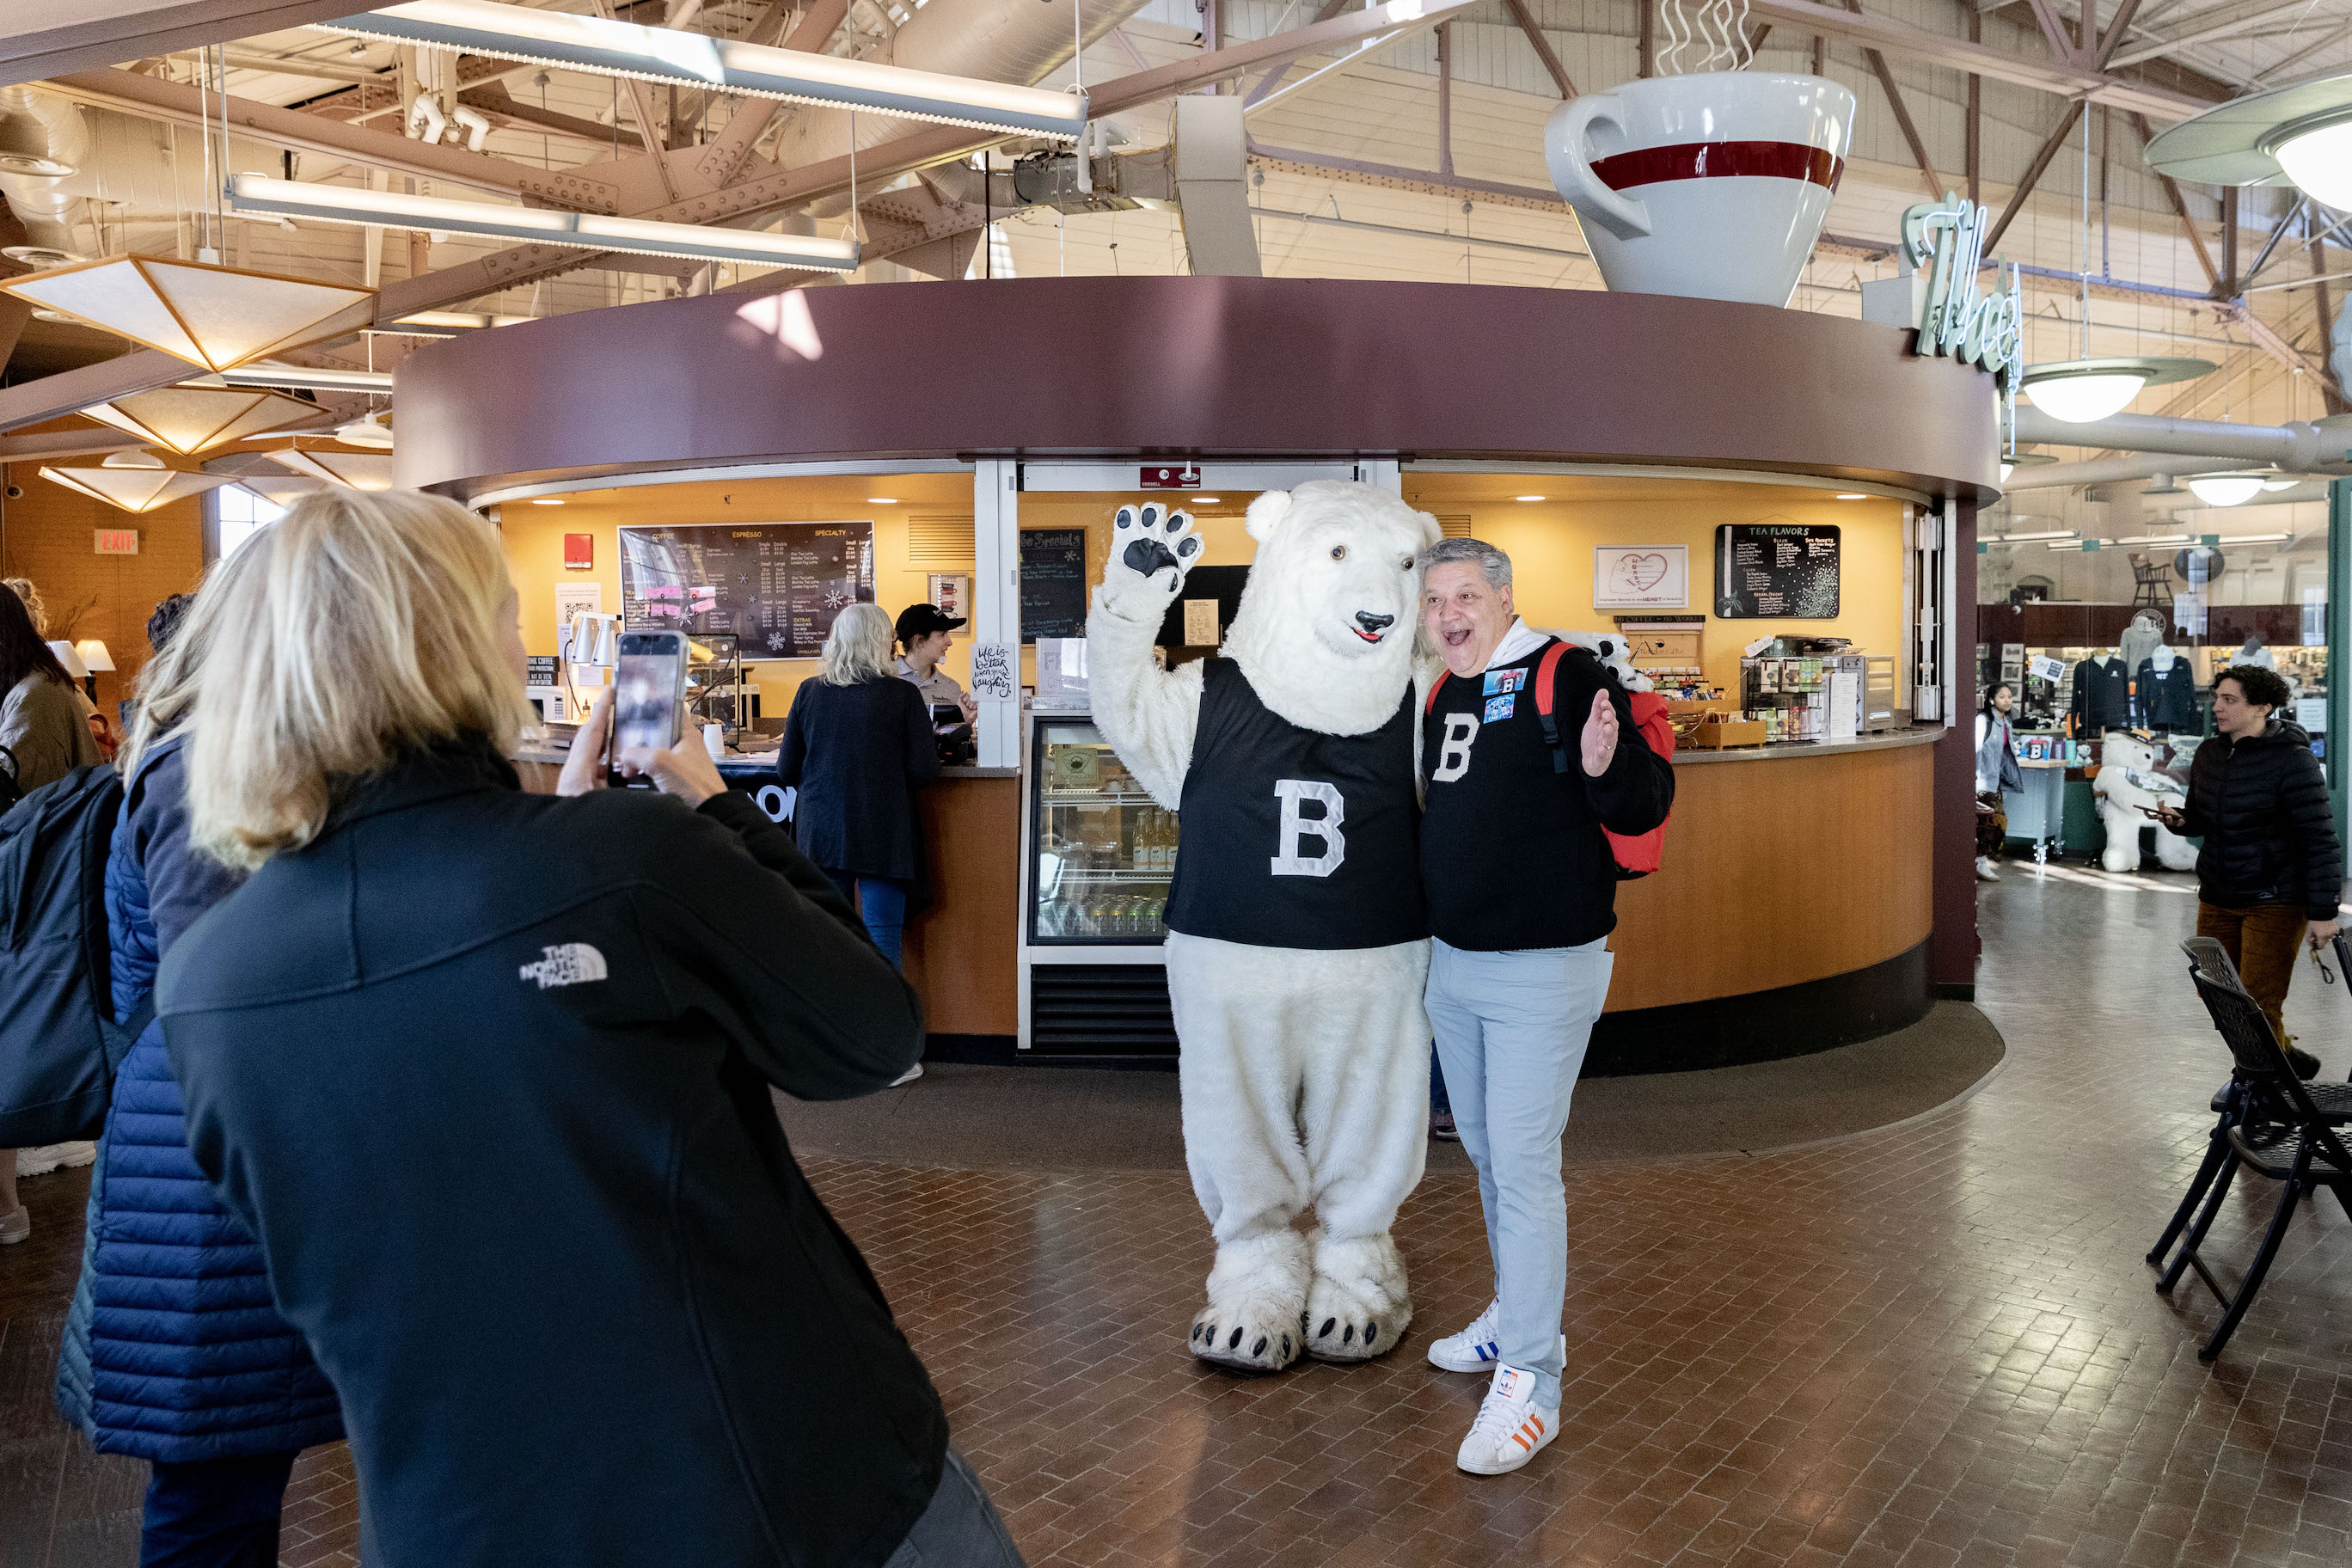 The polar bear mascot poses with Bowdoin alumni